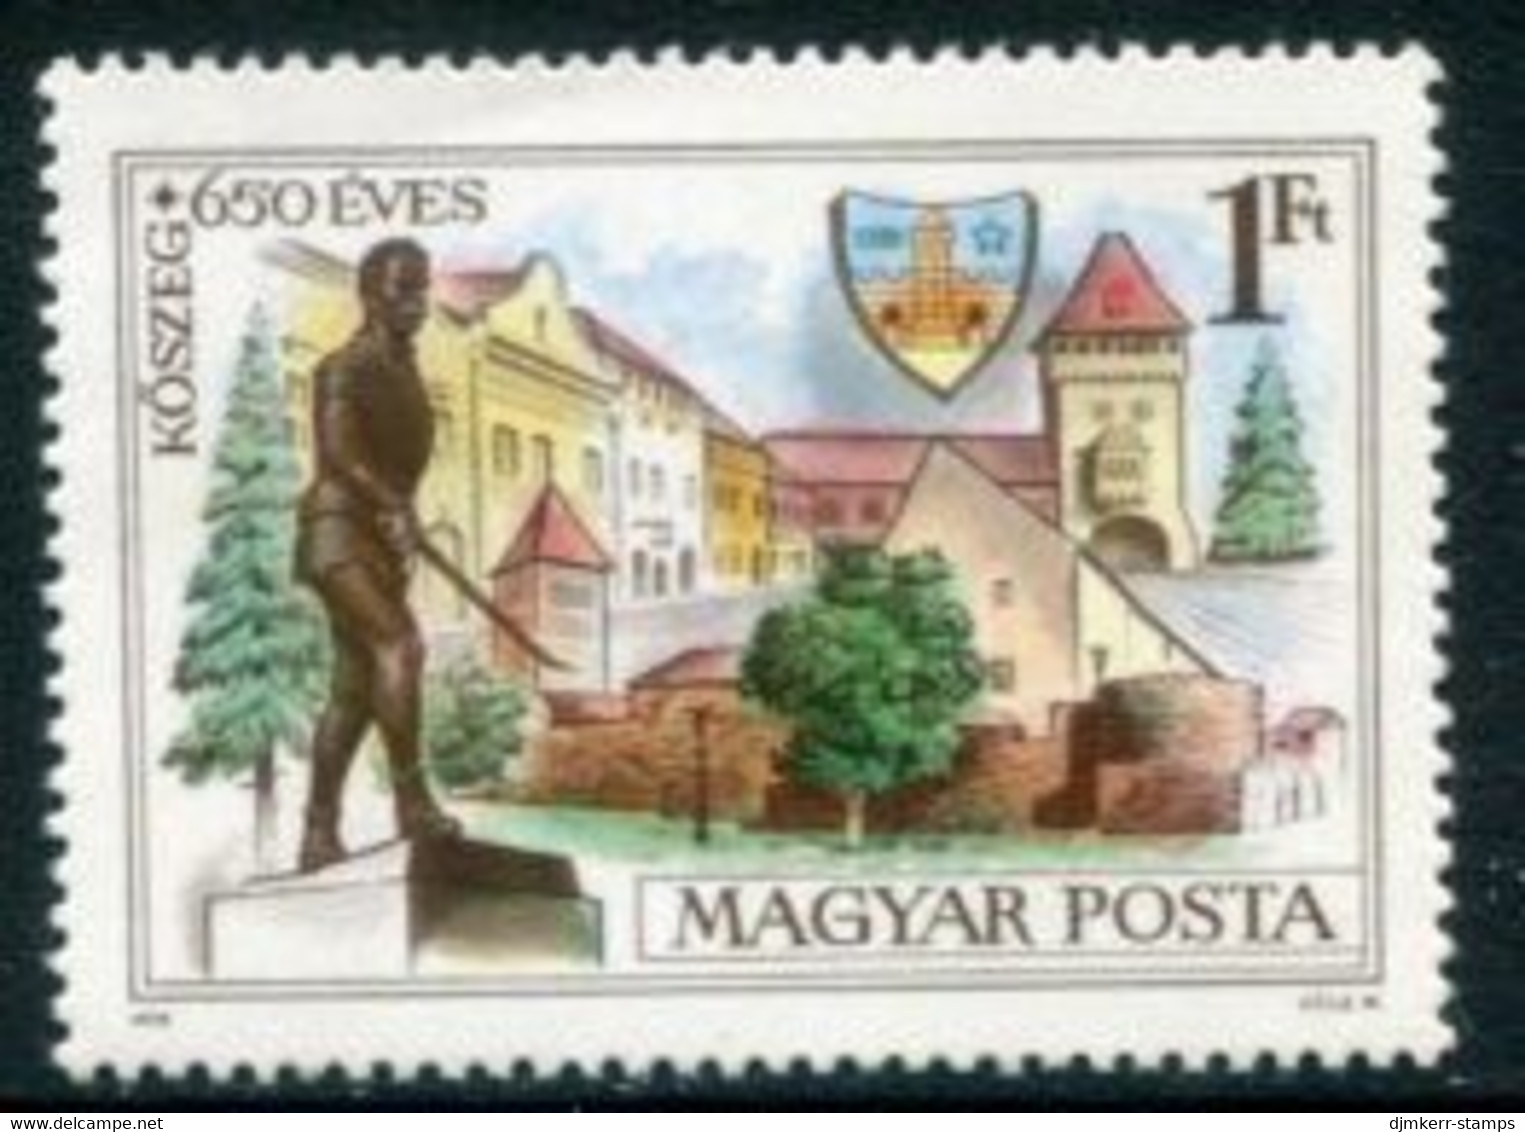 HUNGARY 1978 650th Anniversary Of Köszeg MNH /**.  Michel 3320 - Ungebraucht